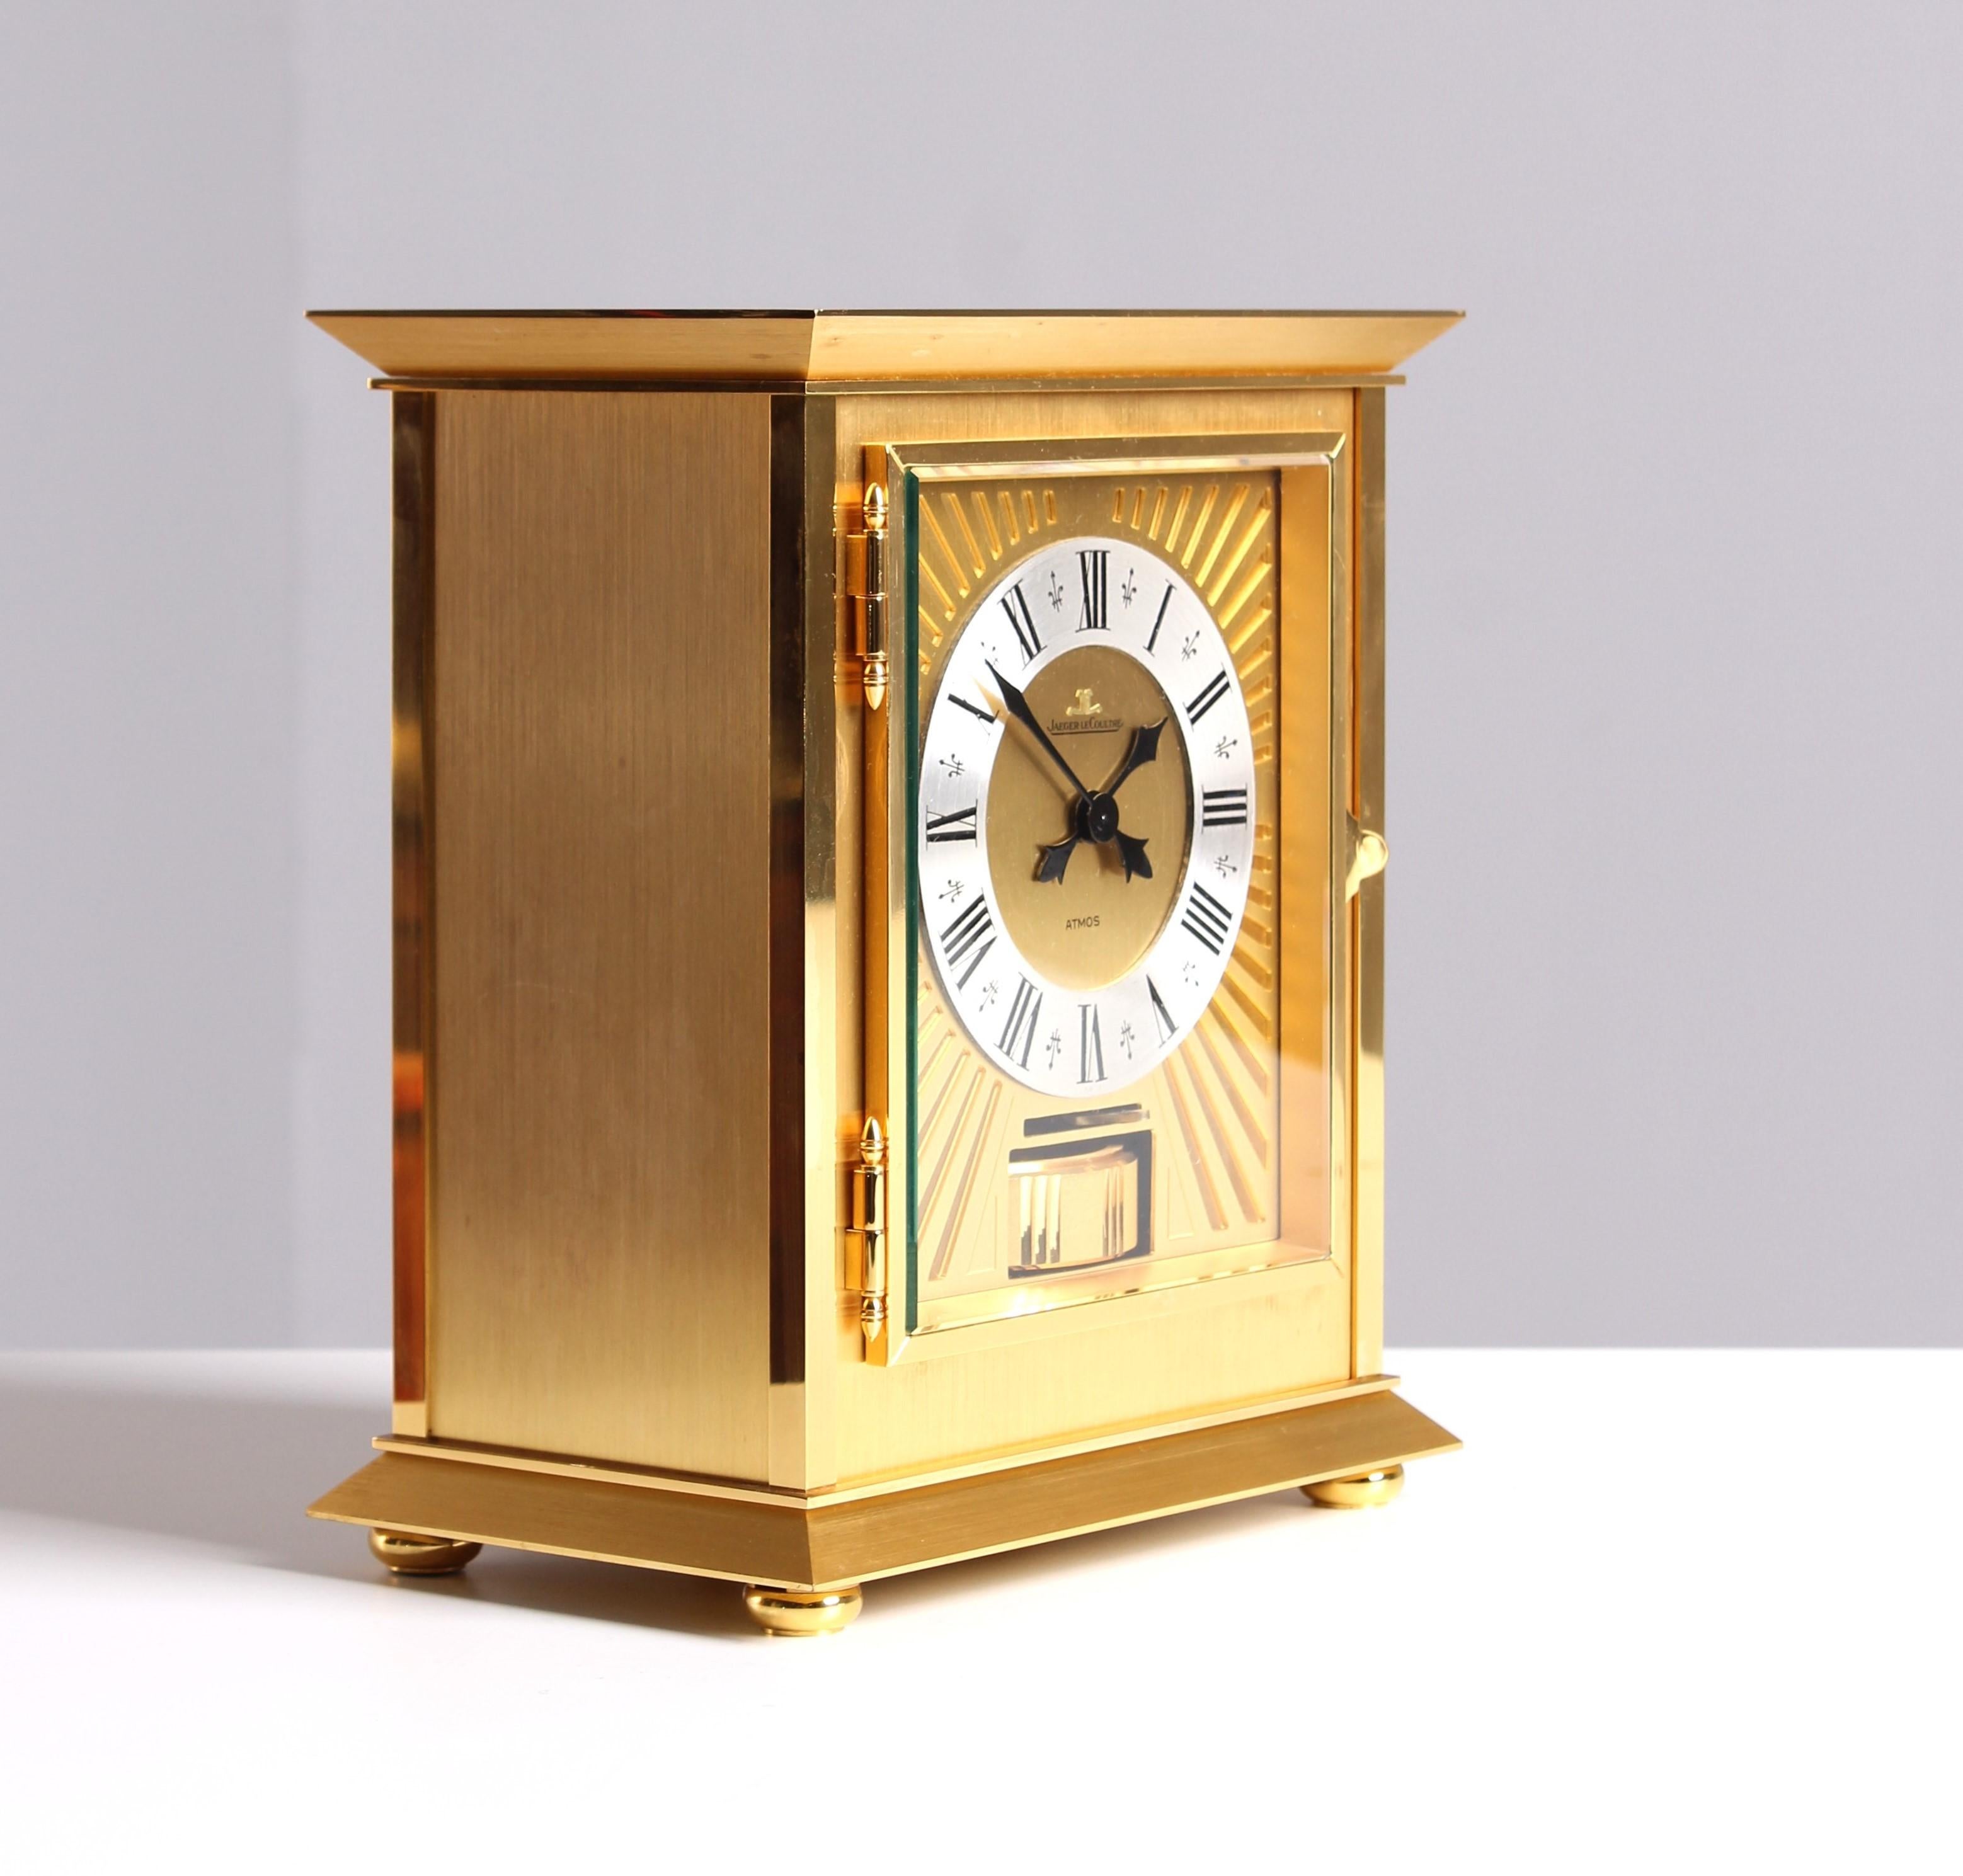 Doré Horloge Atmos de Jaeger LeCoultre, en or royal, fabriquée en 1978 en vente